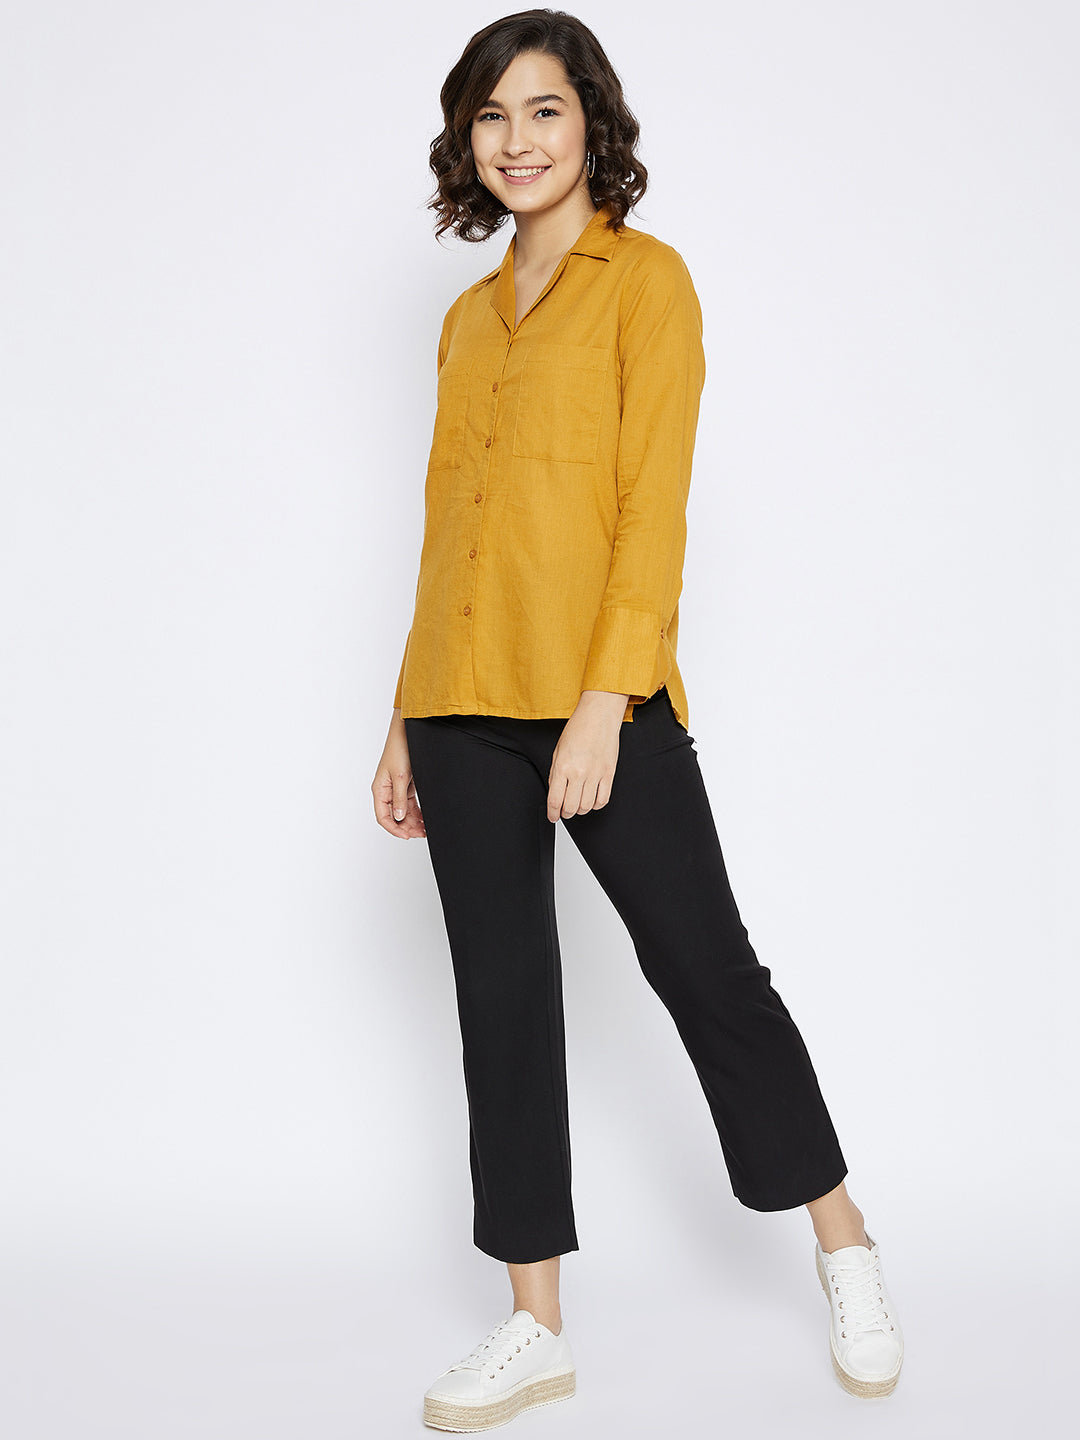 Mustard Slim Fit shirt - Women Shirts